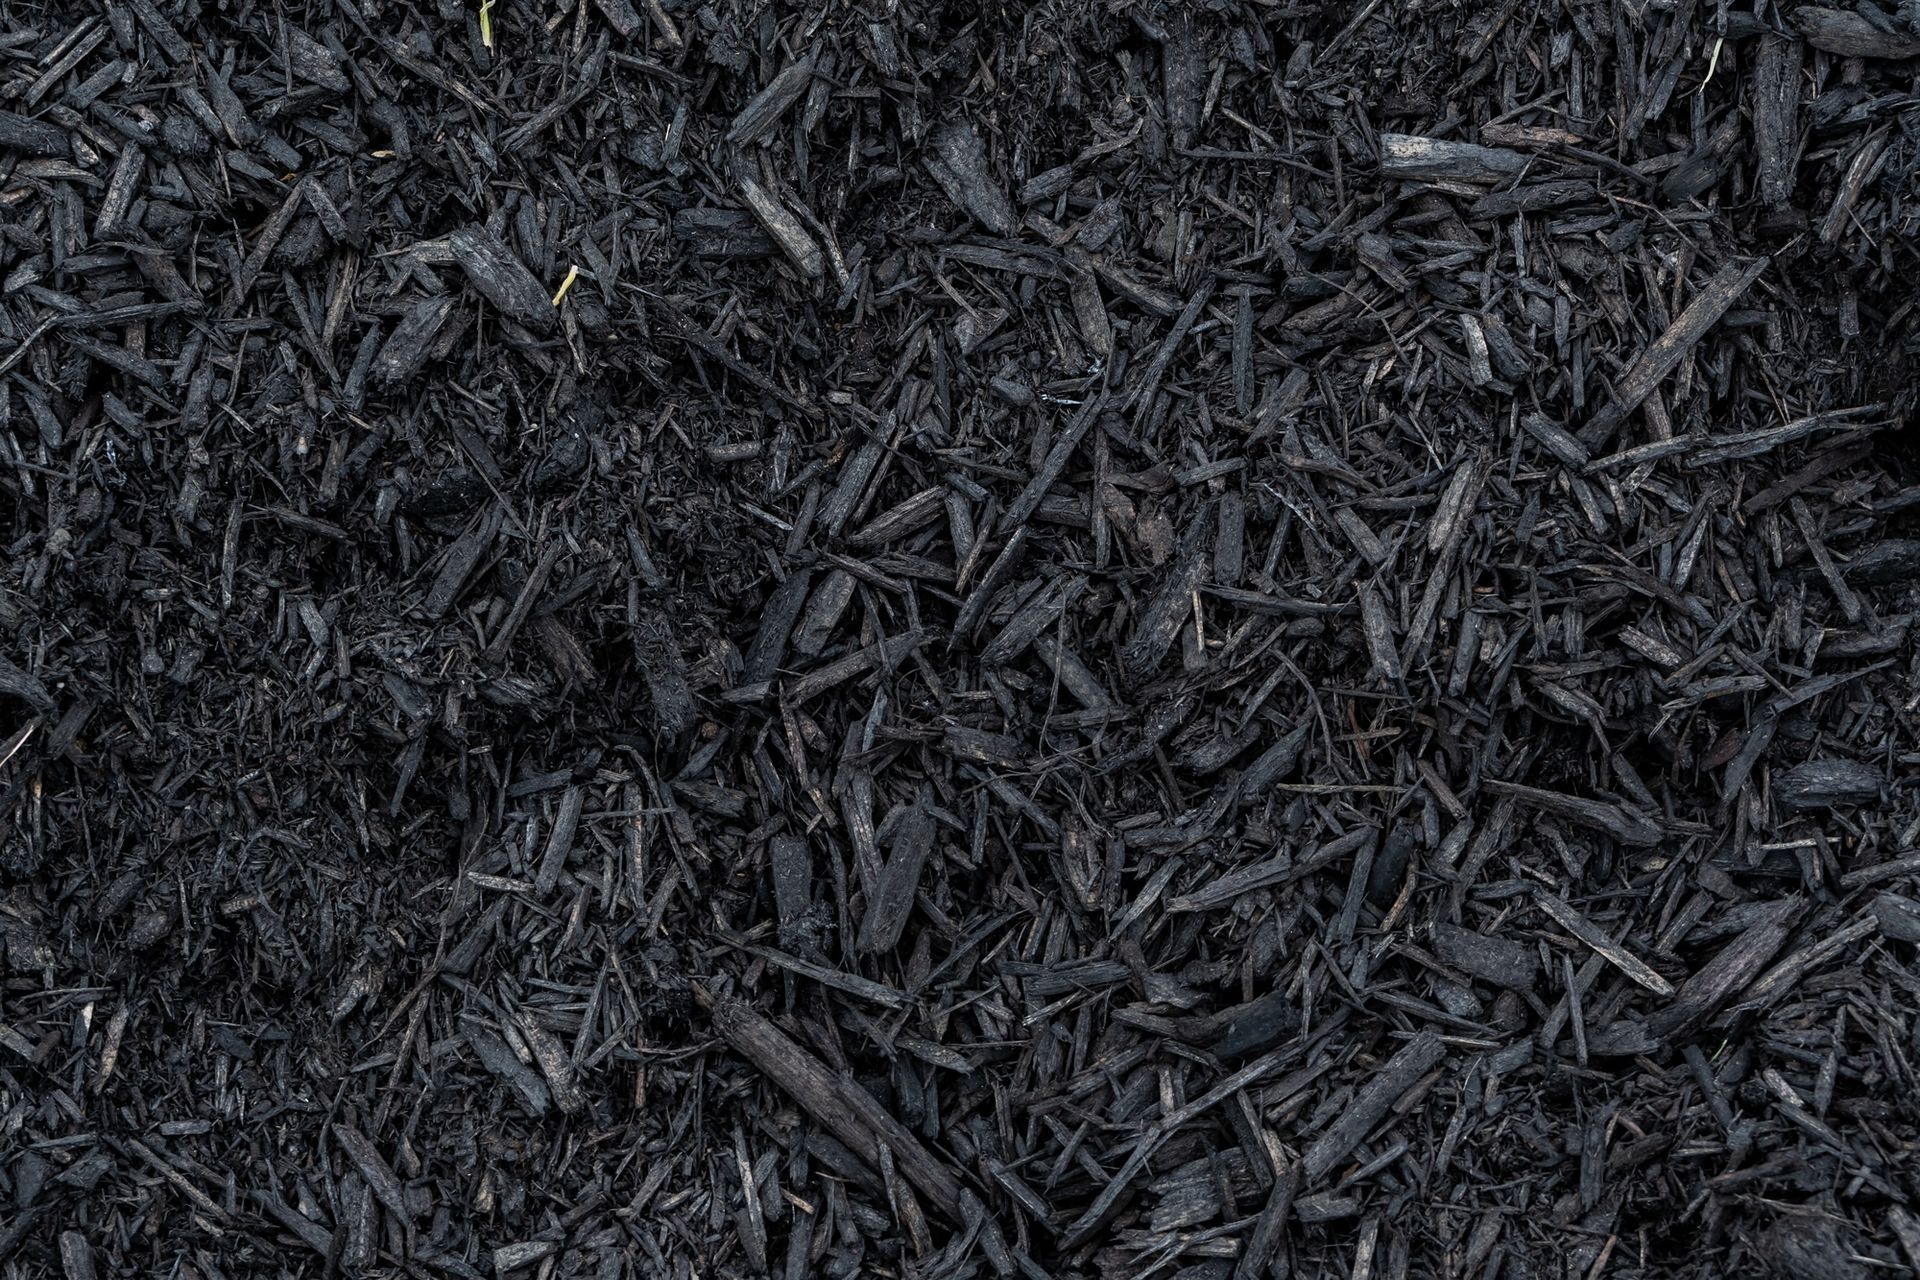 dark colored mulch chips